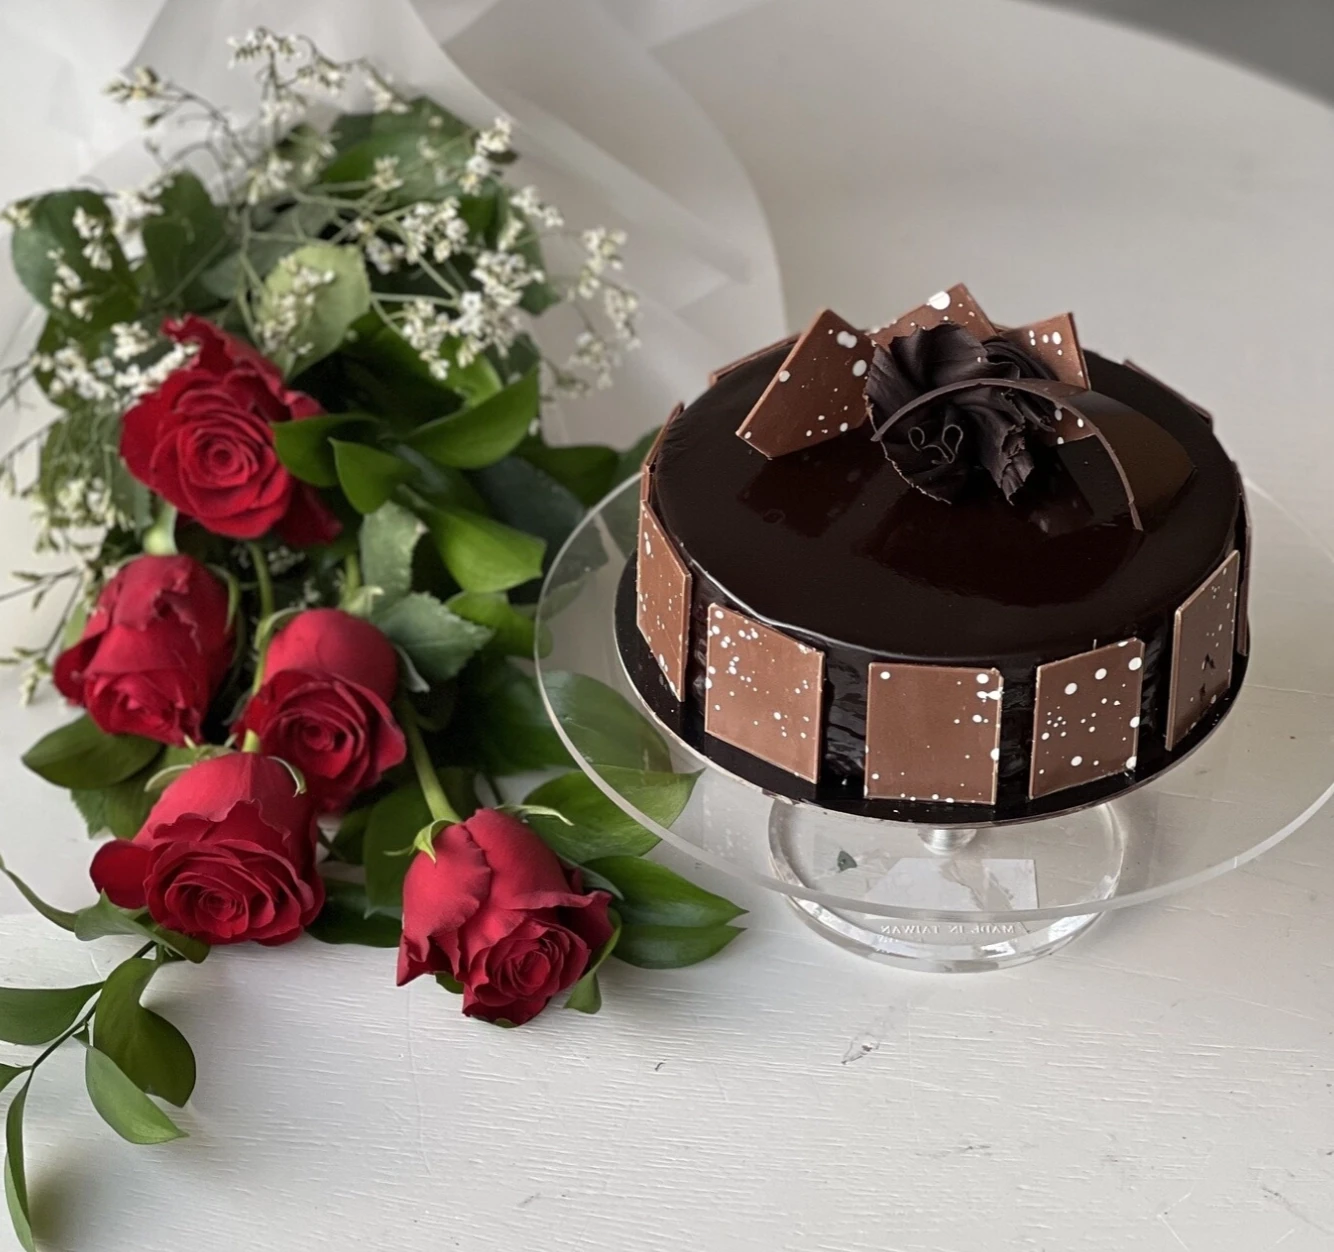 Chocolate Fudge Cake with Roses